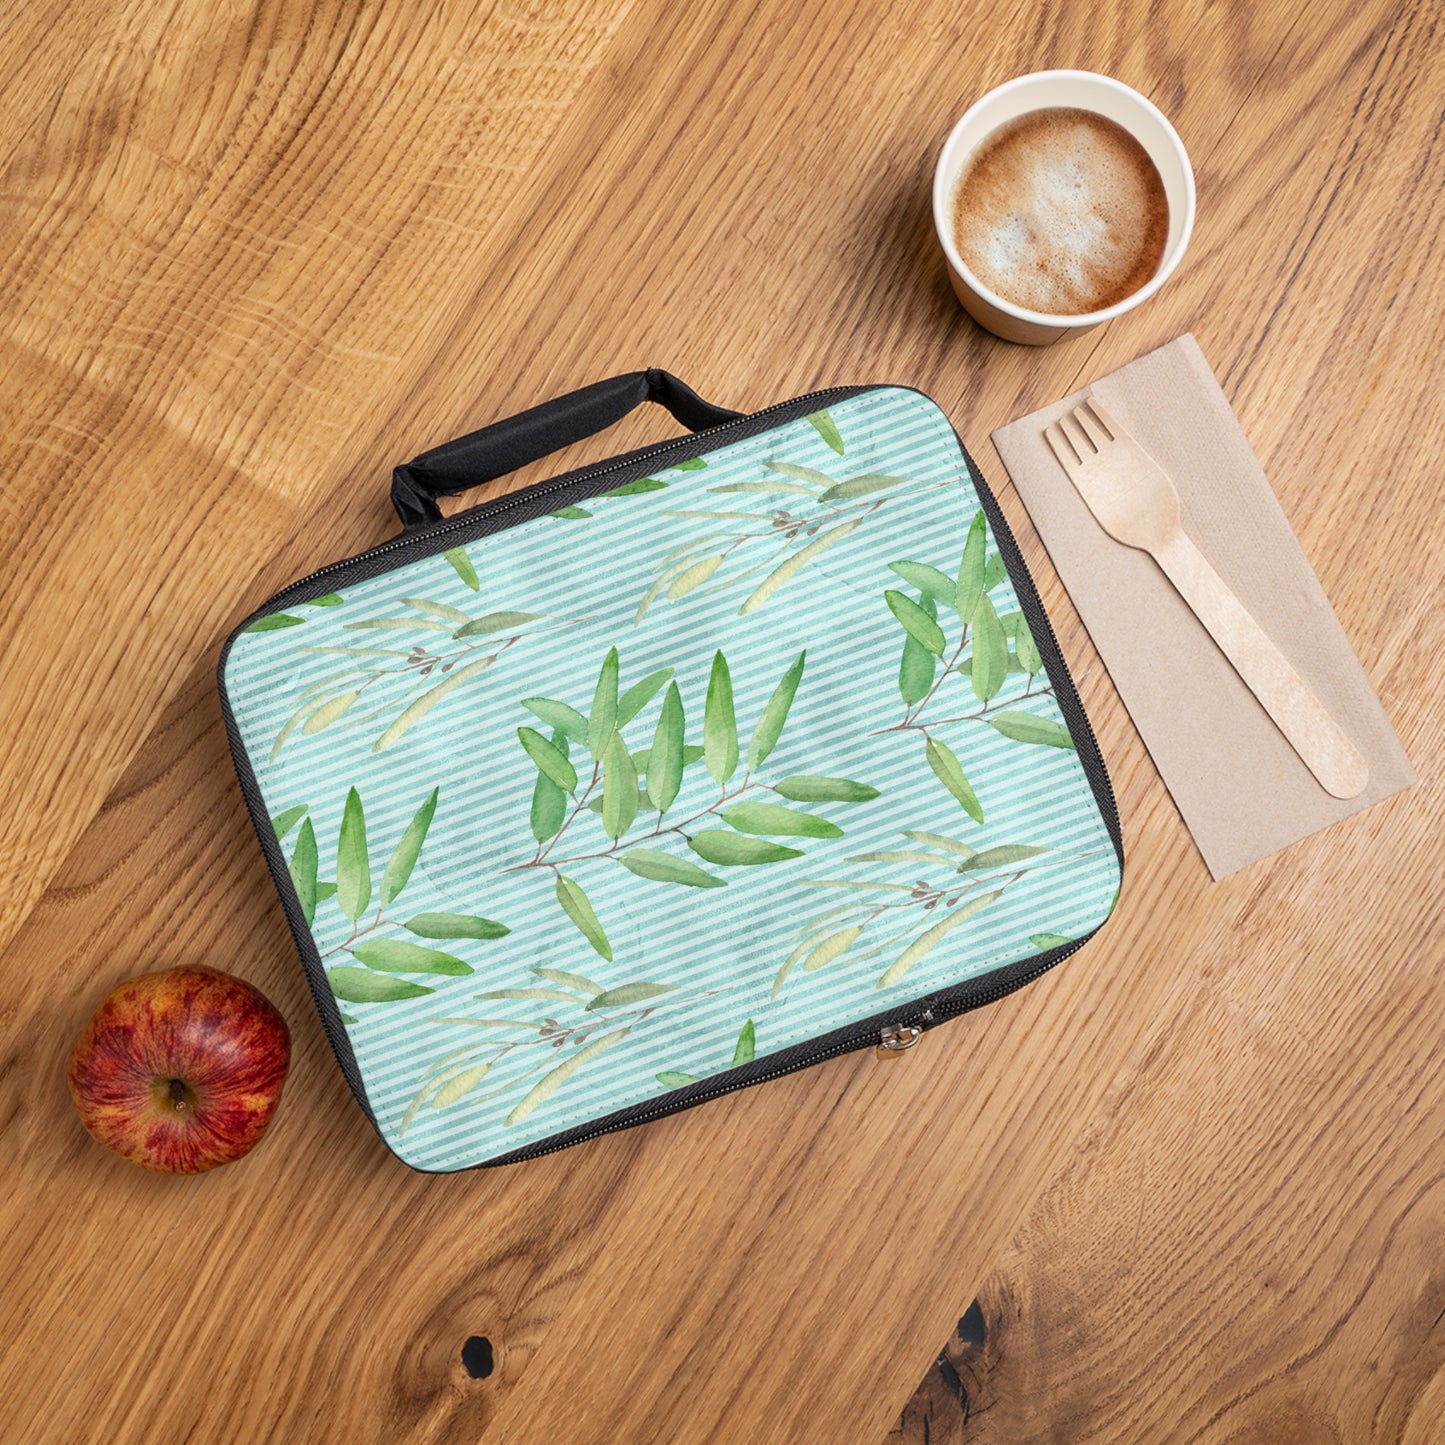 Watercolor Leaves Zipper Storage/Lunch Bag